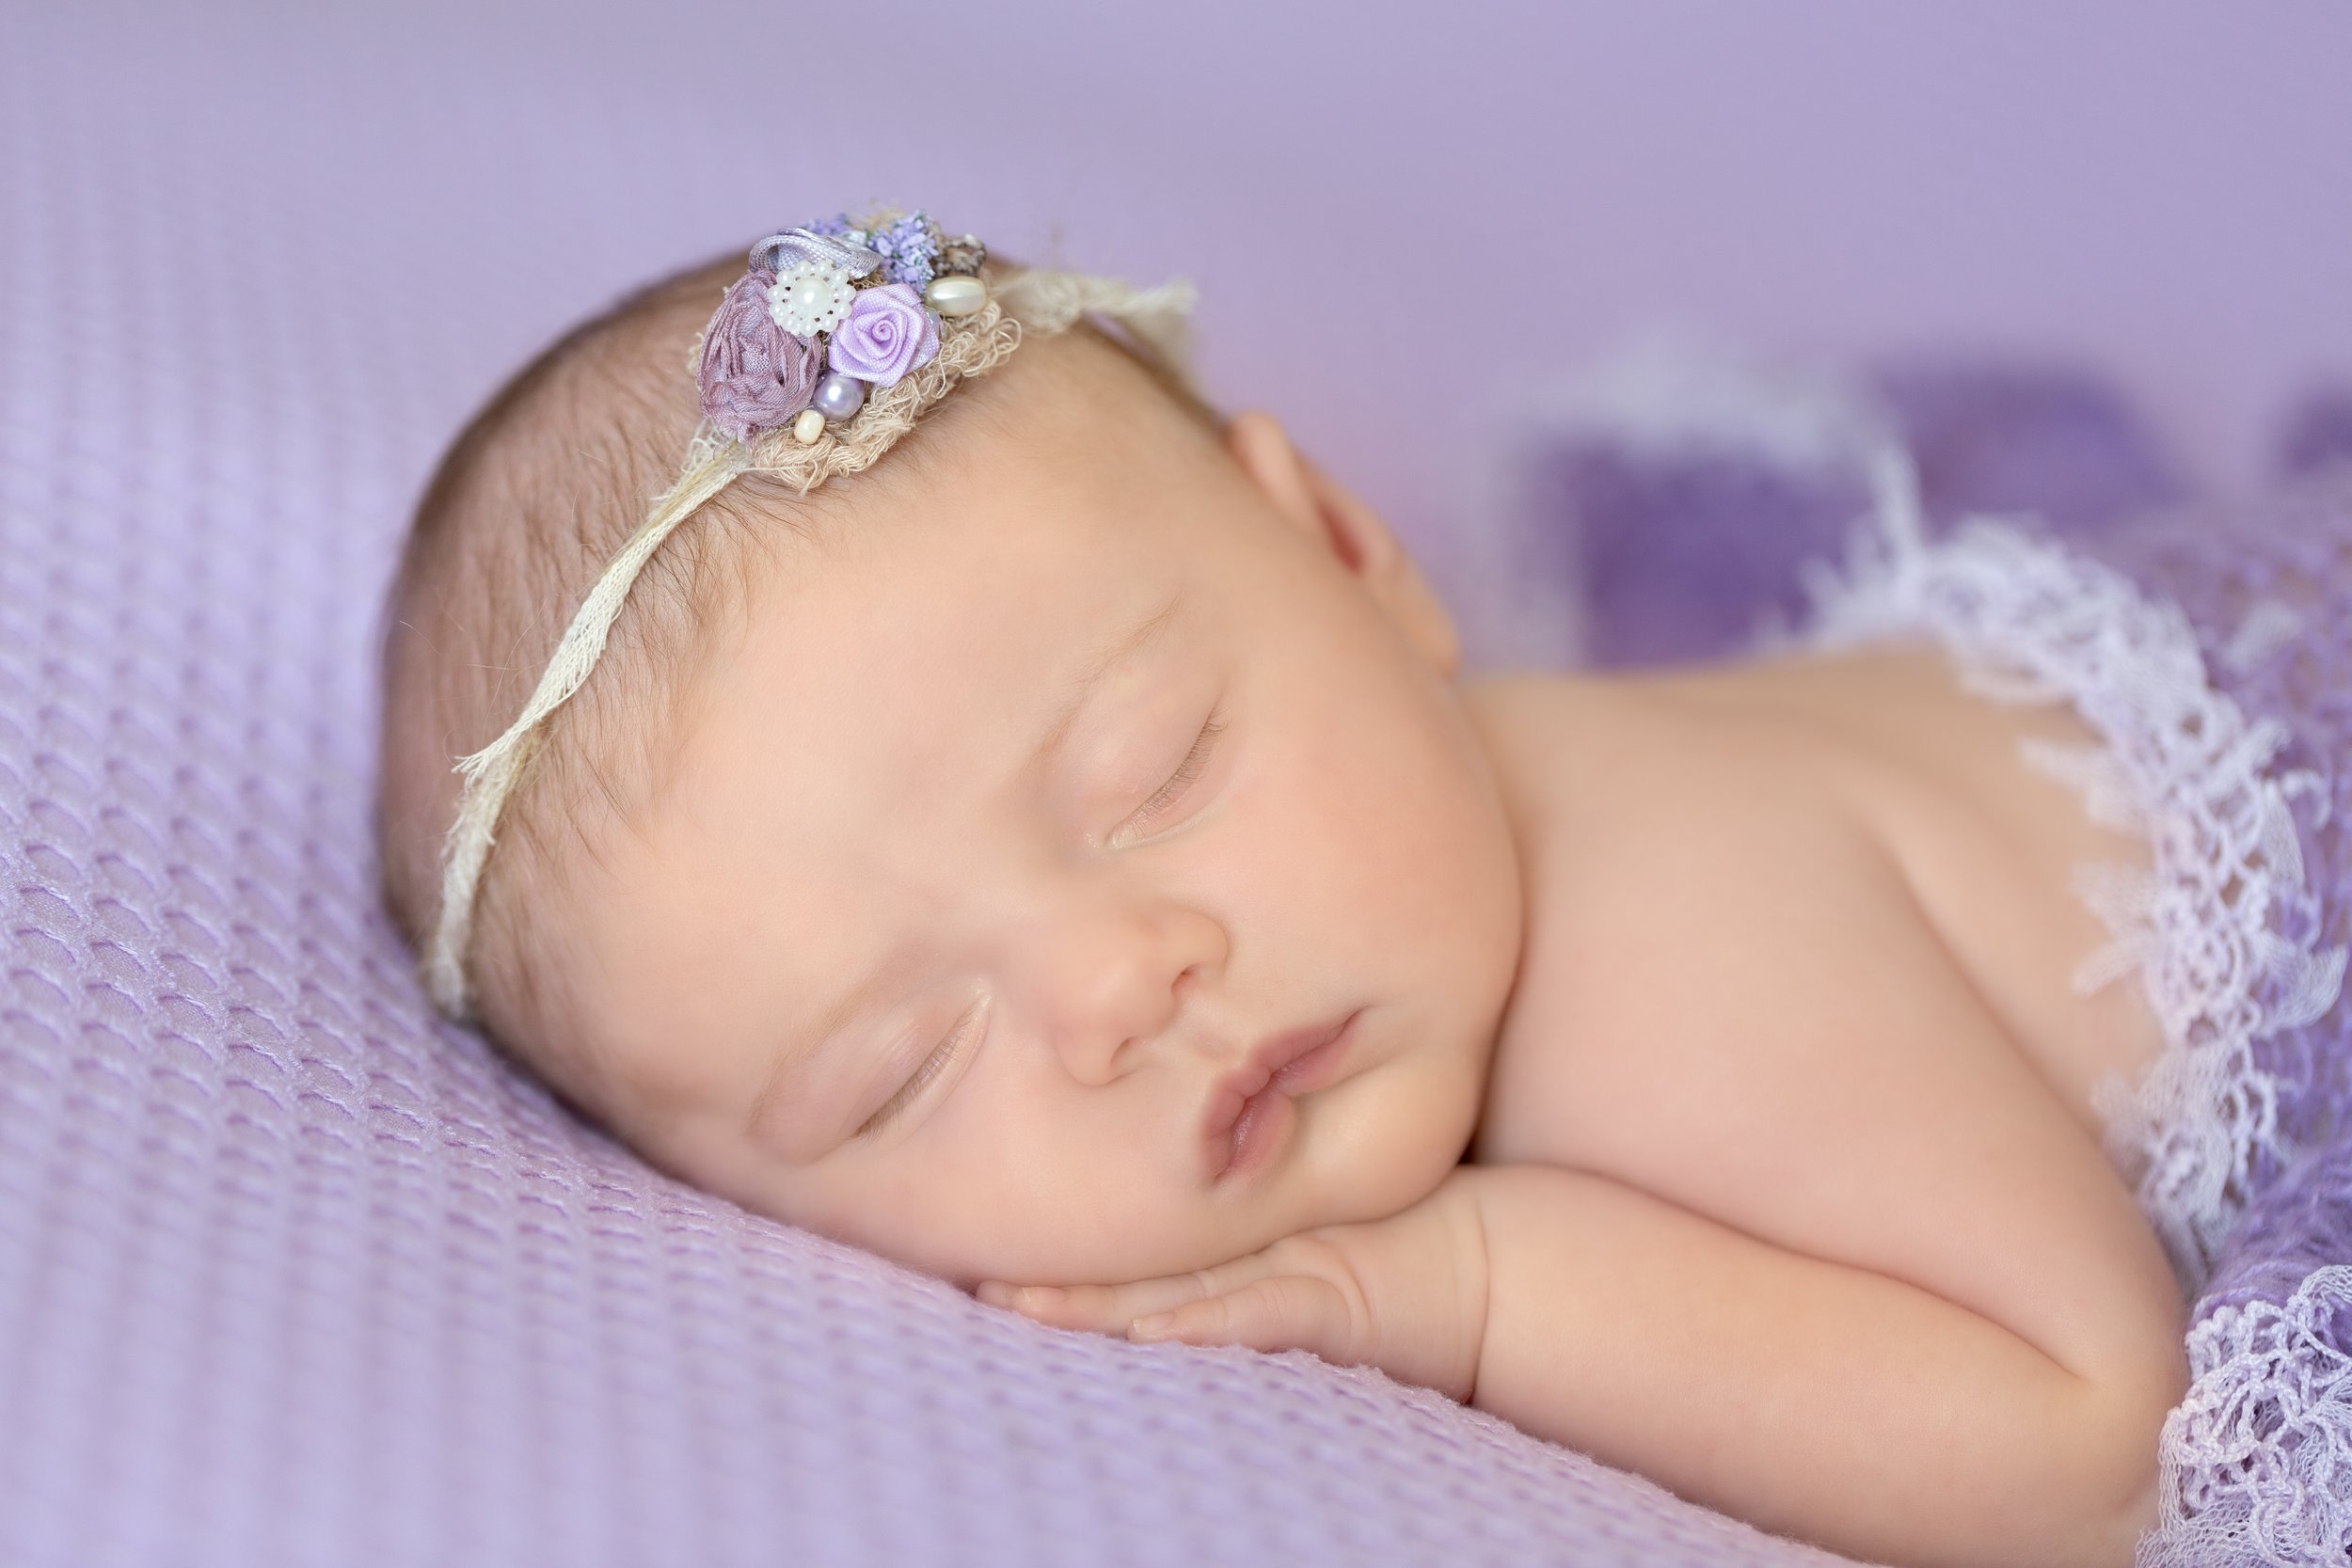 newborn baby girl on purple blanket wearing pretty headband